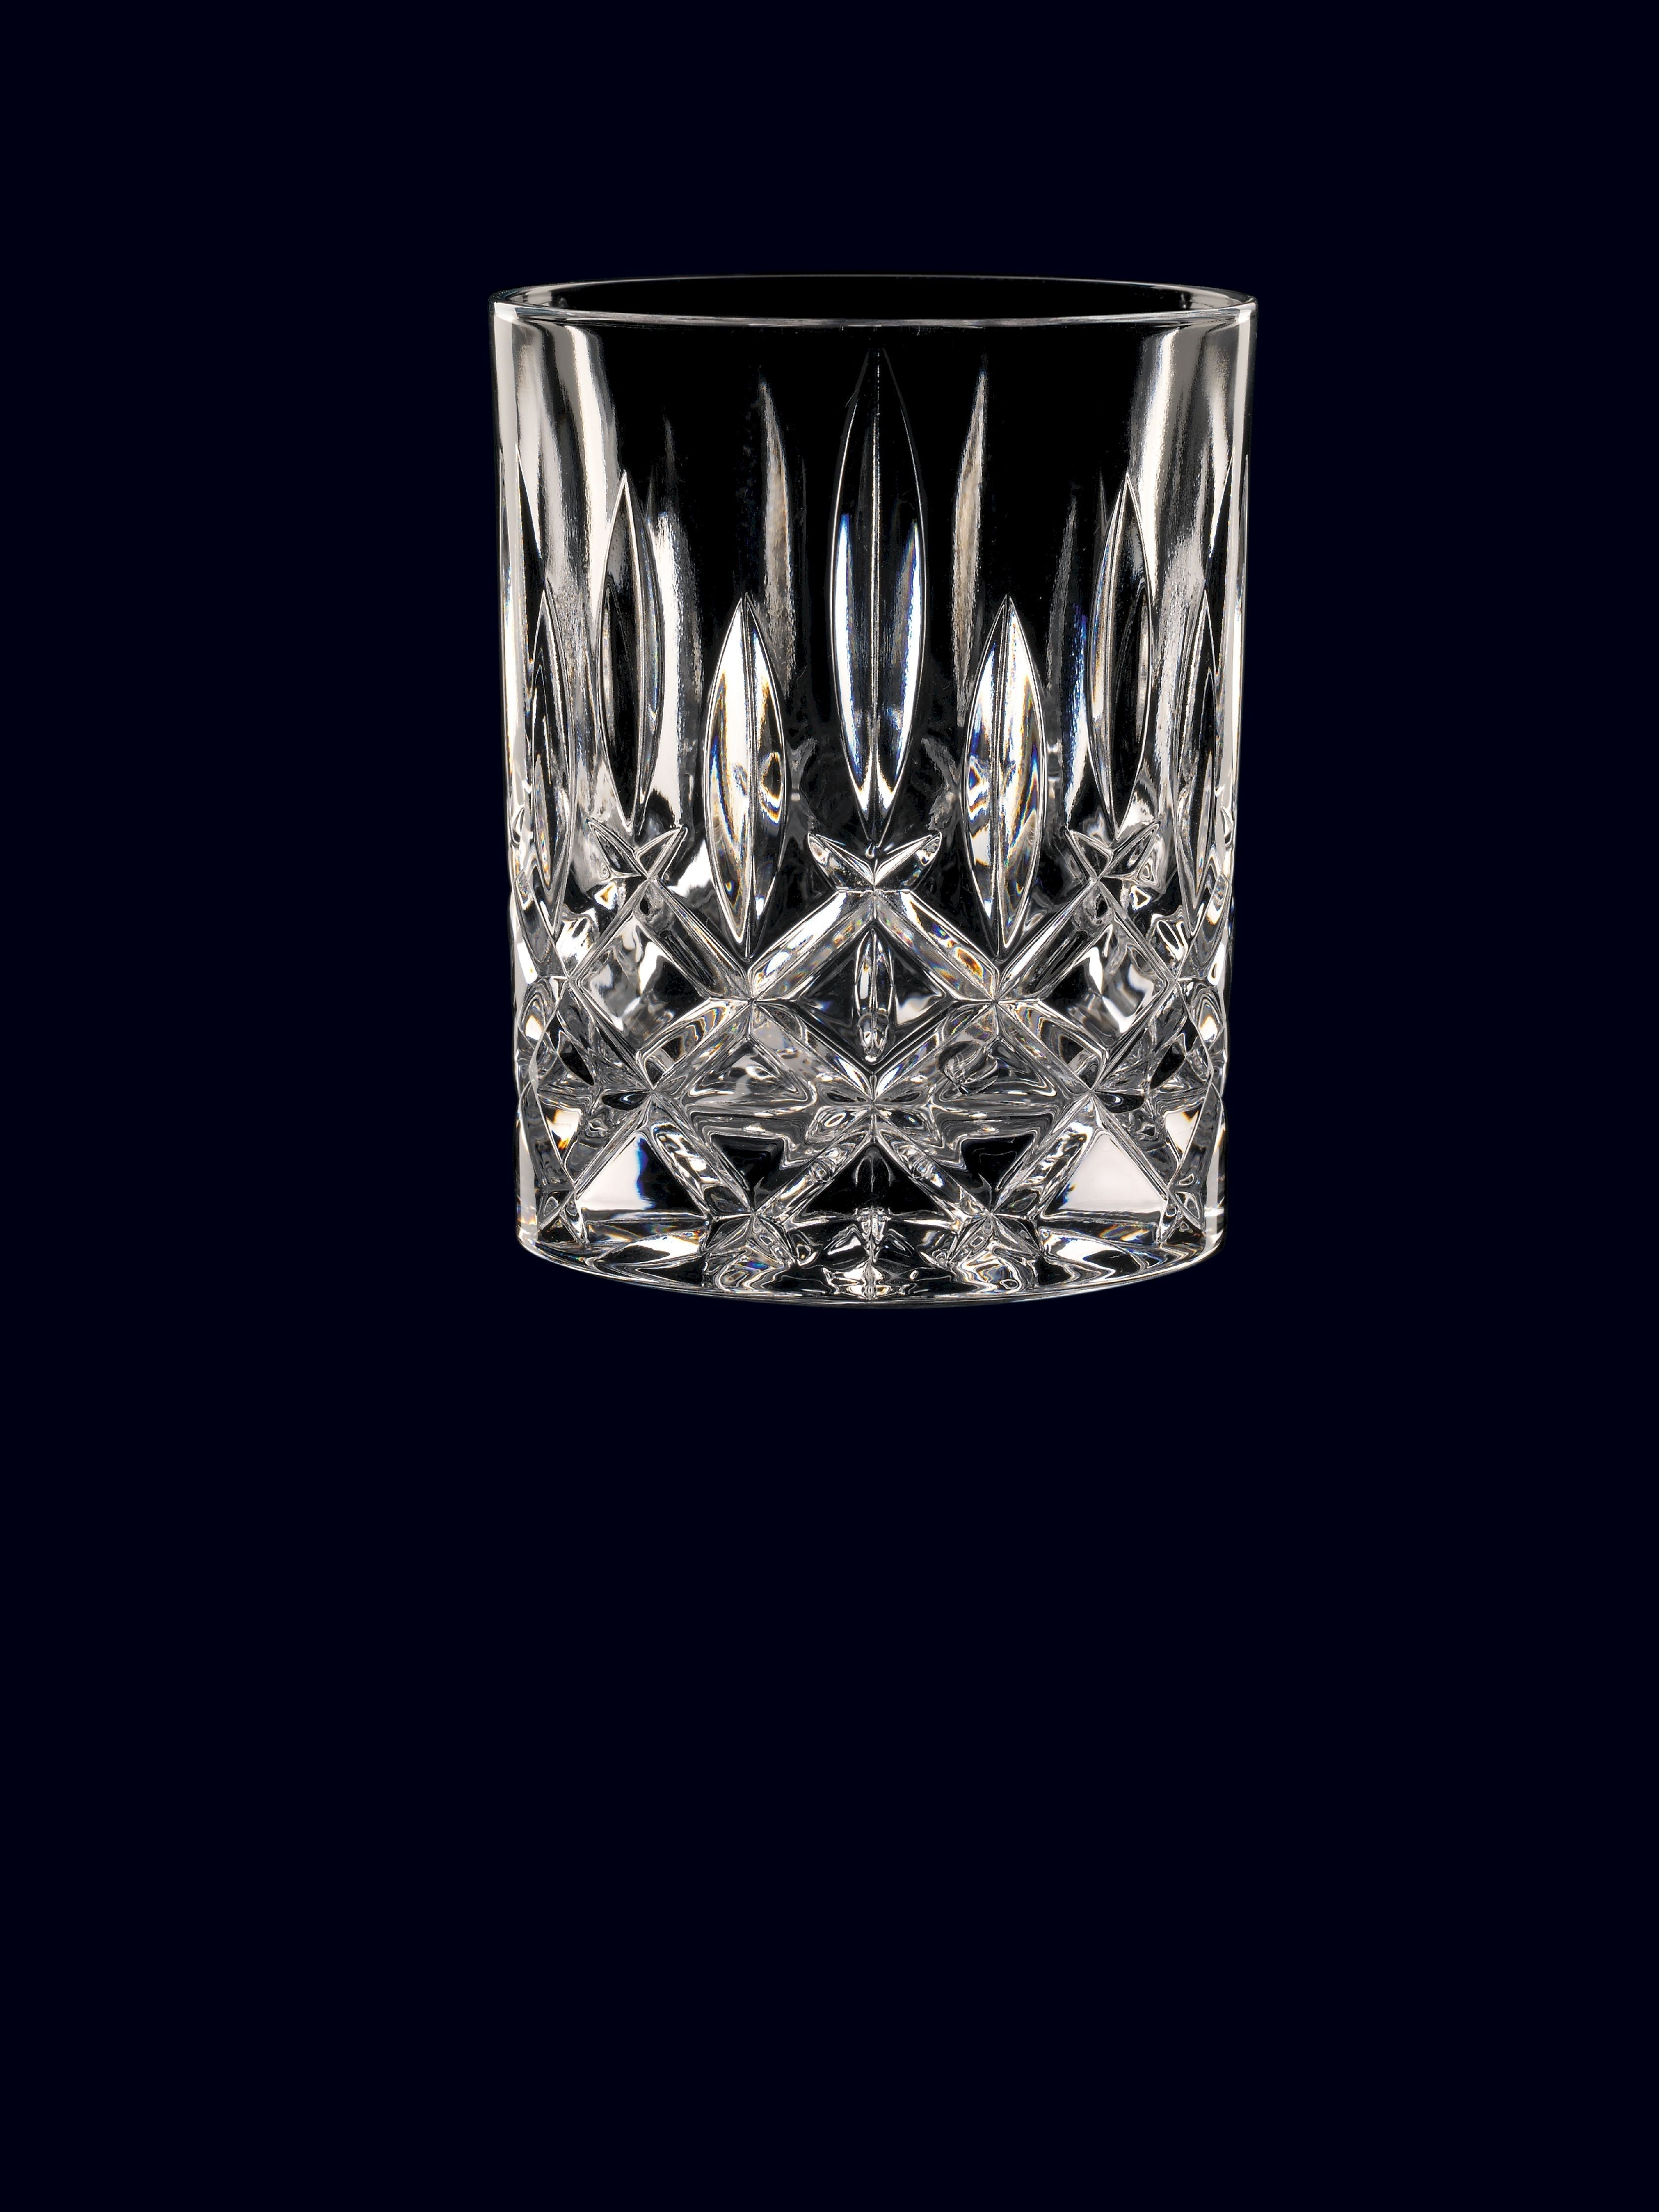 Nachtmann Noblesse Whisky Glass 295 ml, juego de 4